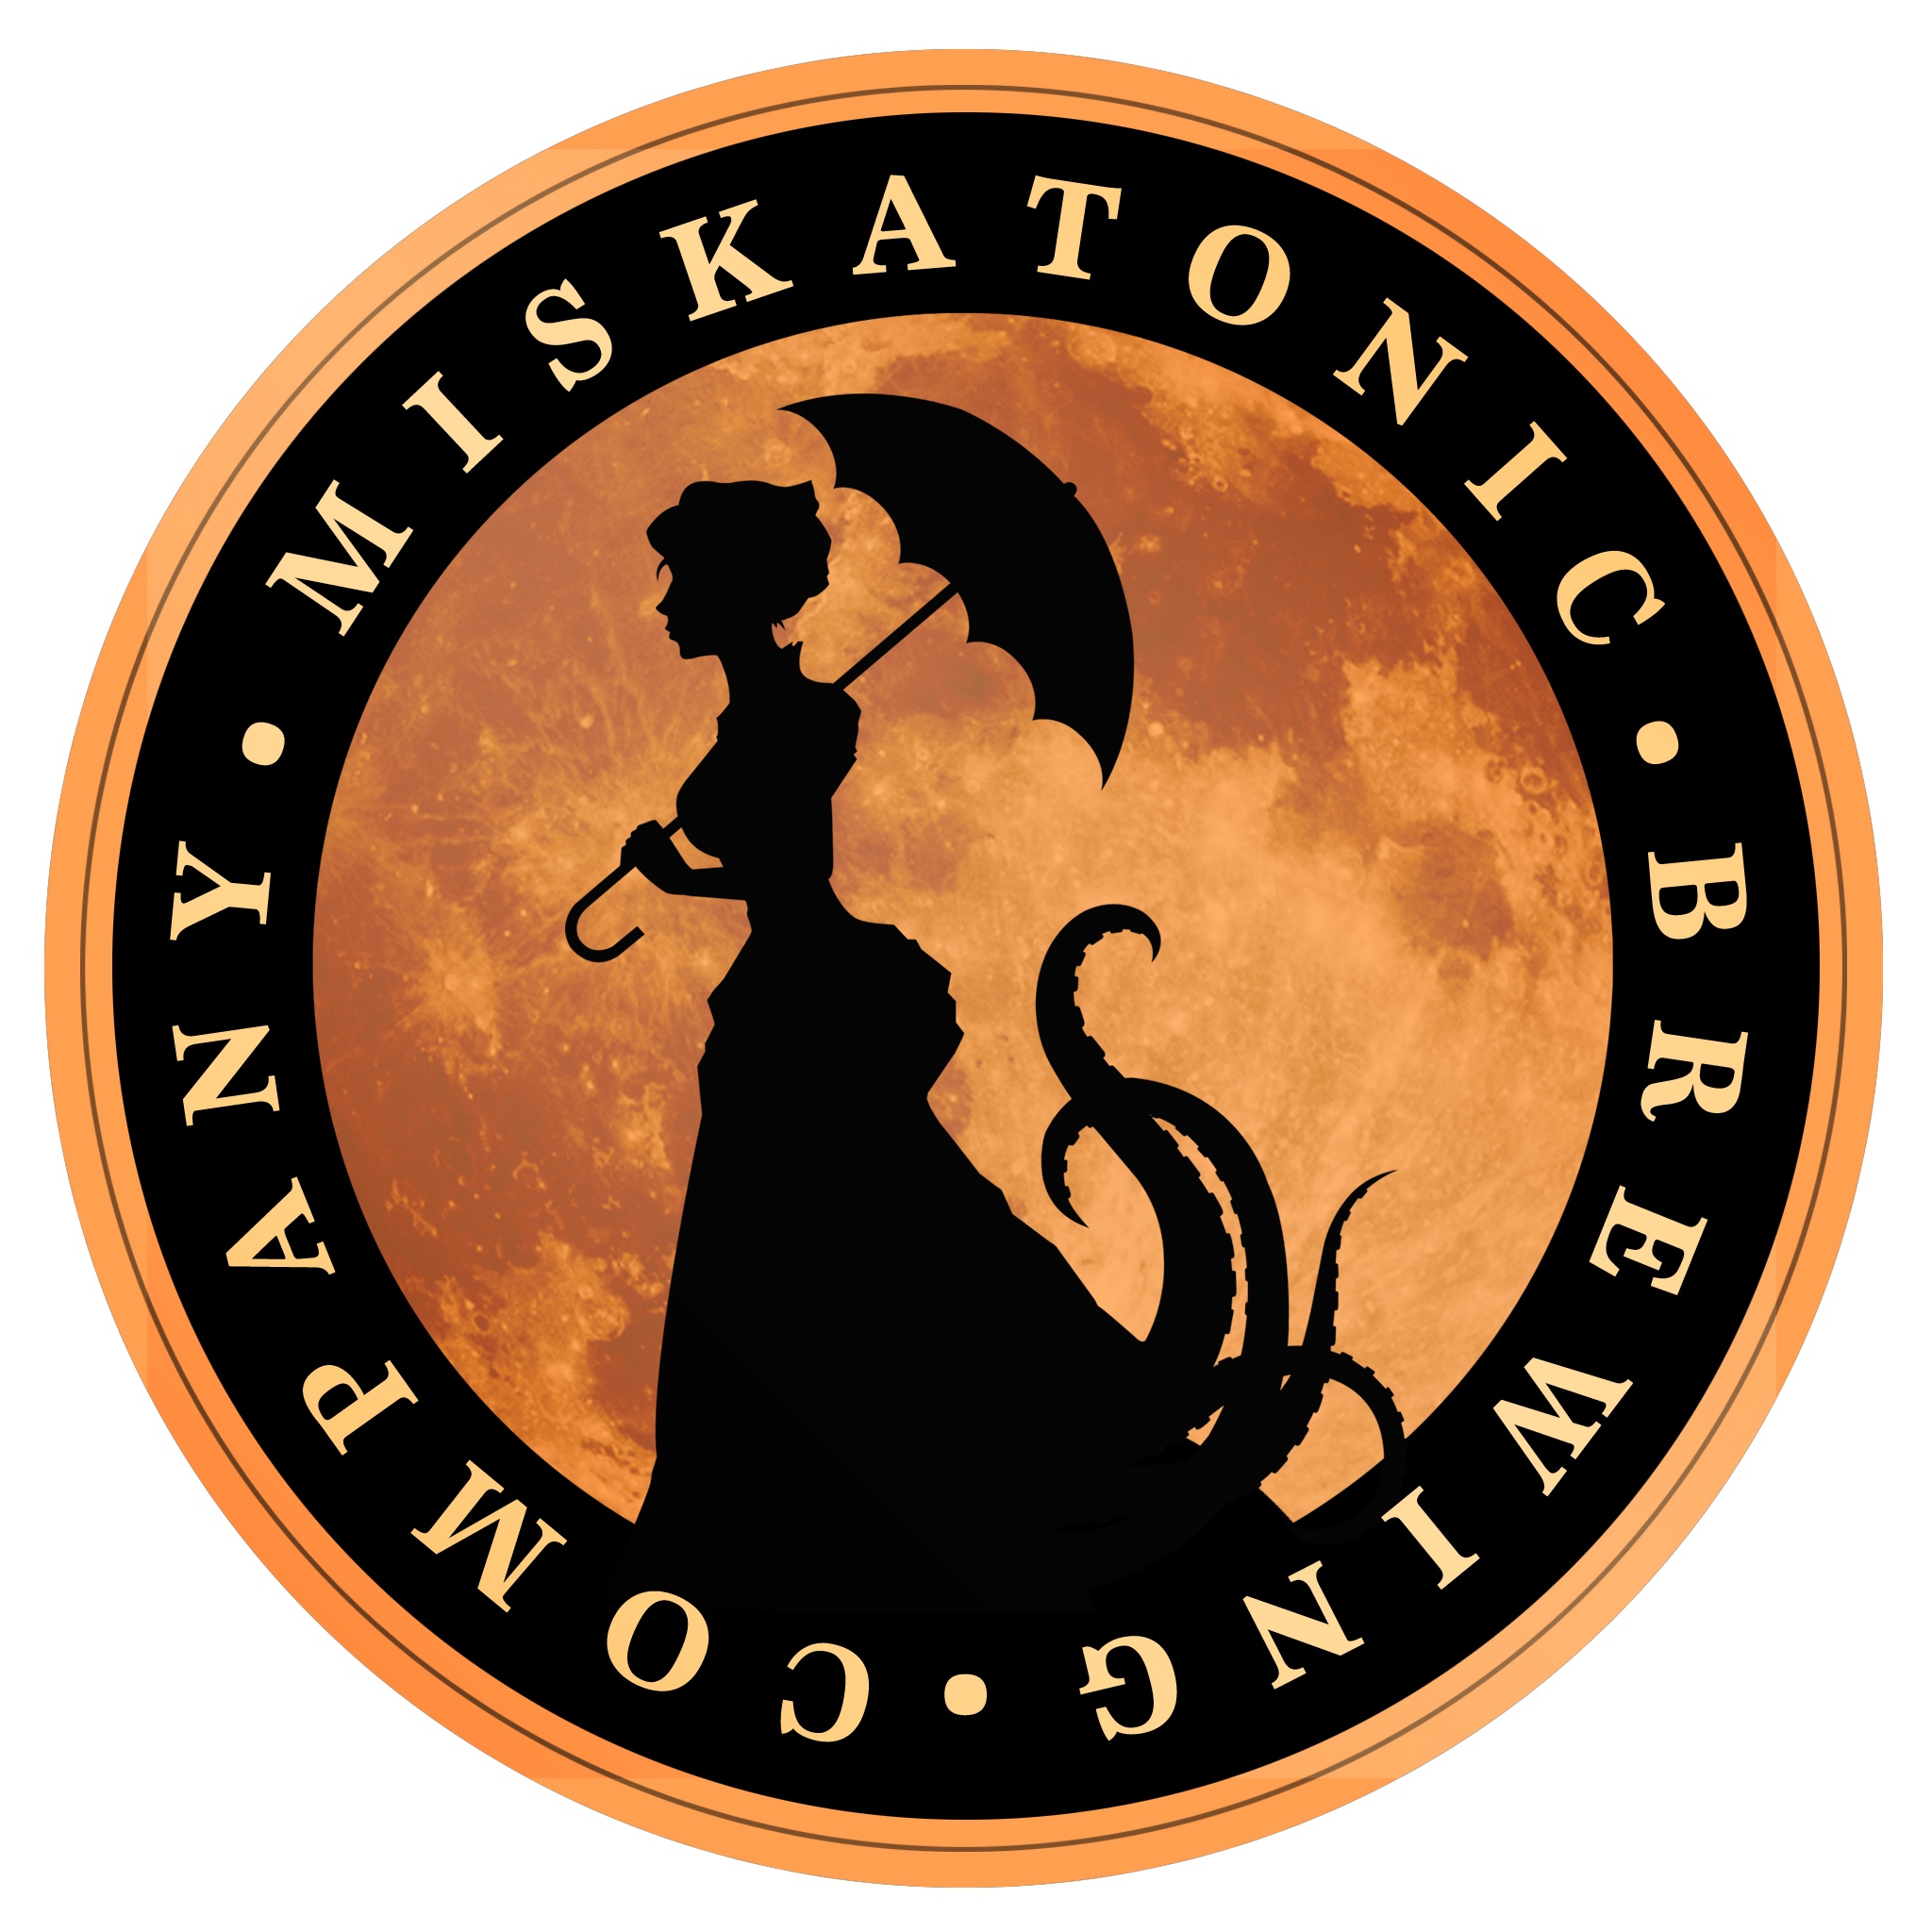 Episode 13 - Miskatonic Brewing